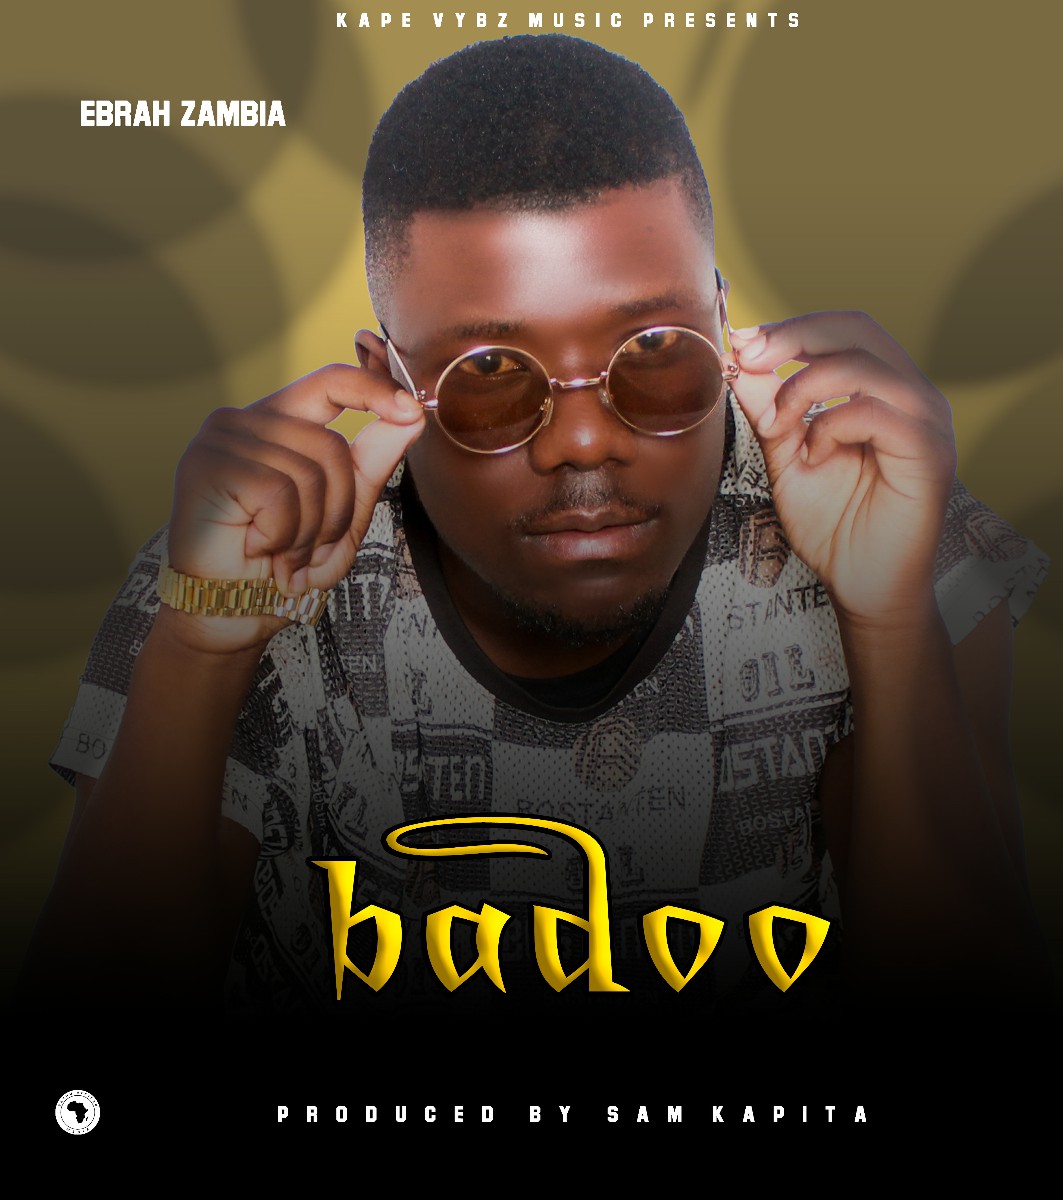 Ebrah Zambia - Badoo